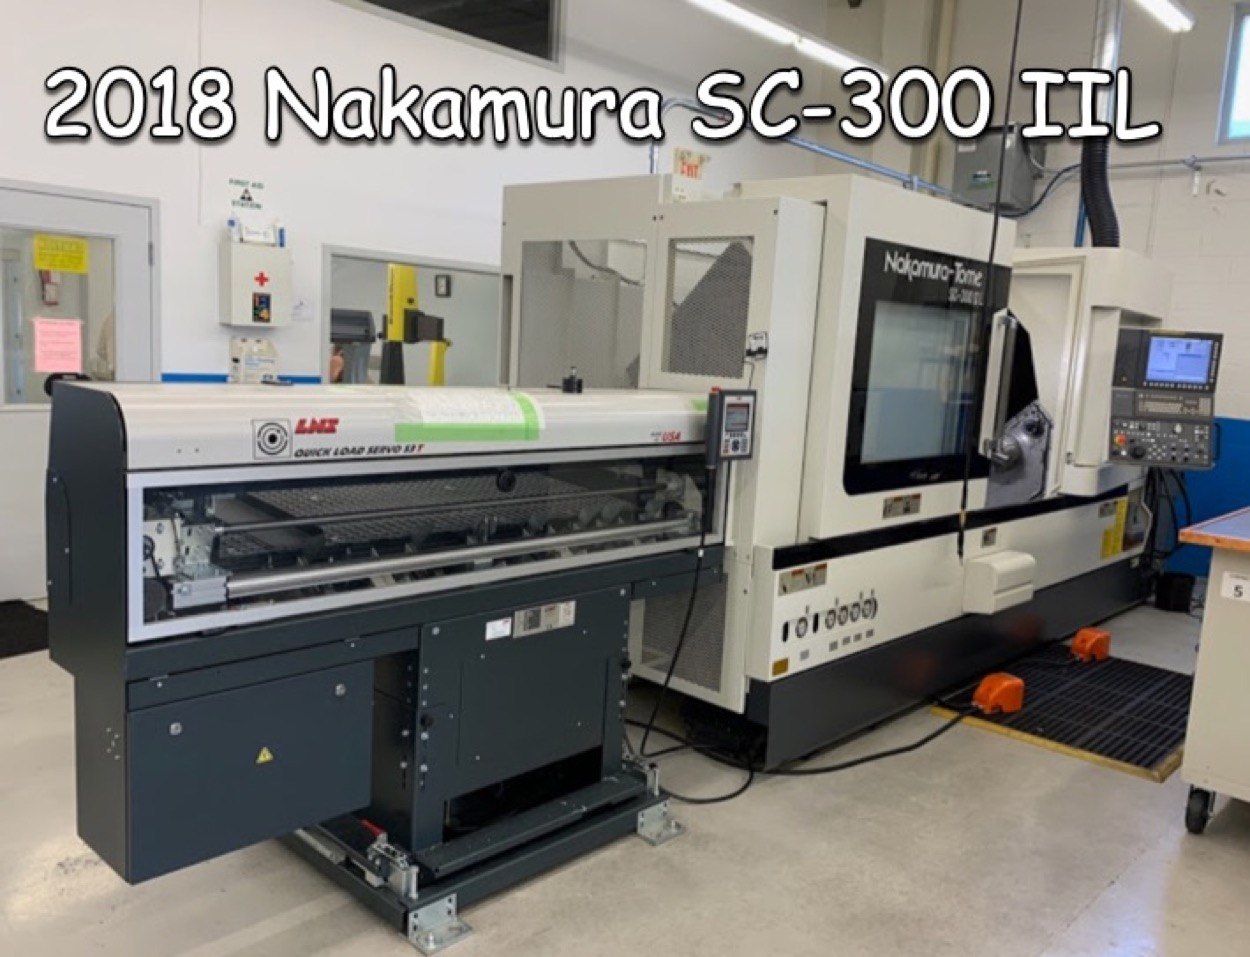 Nakamura SC-300 IIL MYS 2018